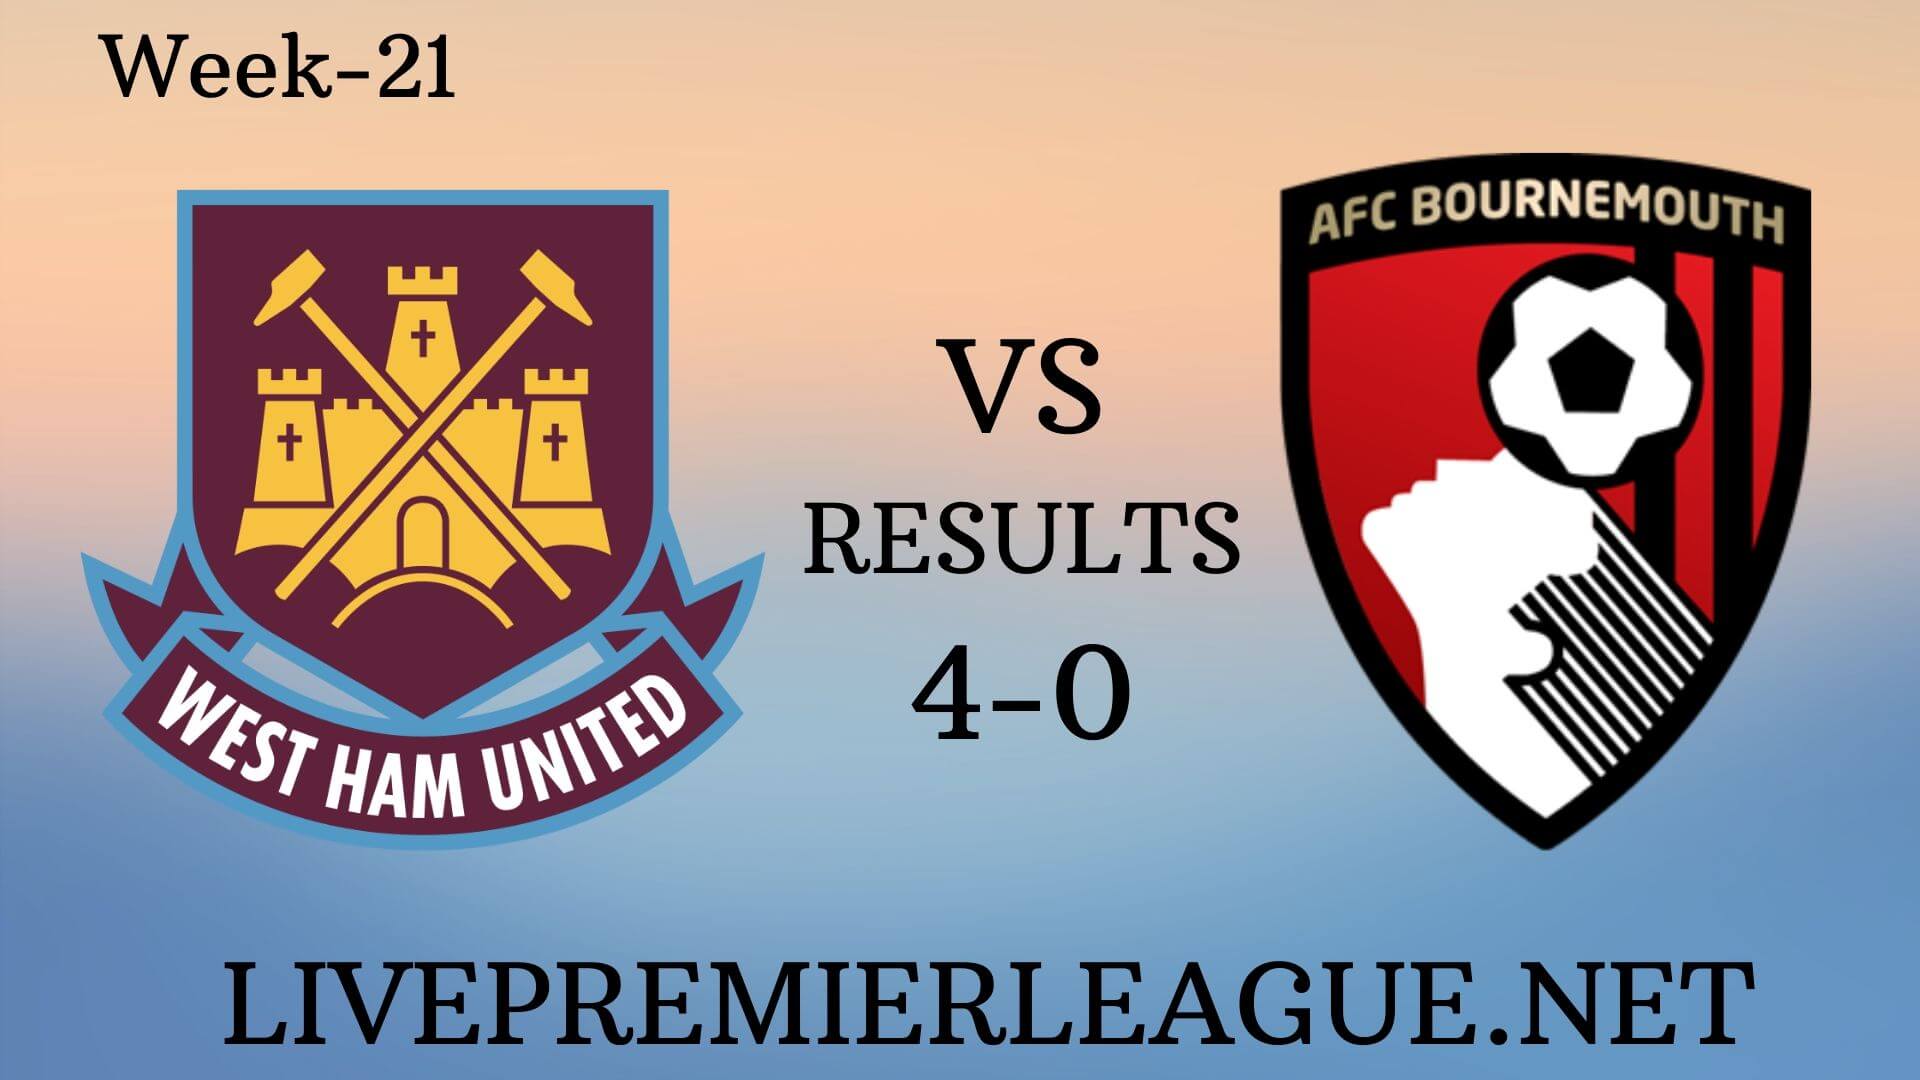 West Ham United Vs AFC Bournemouth | Week 21 Result 2019